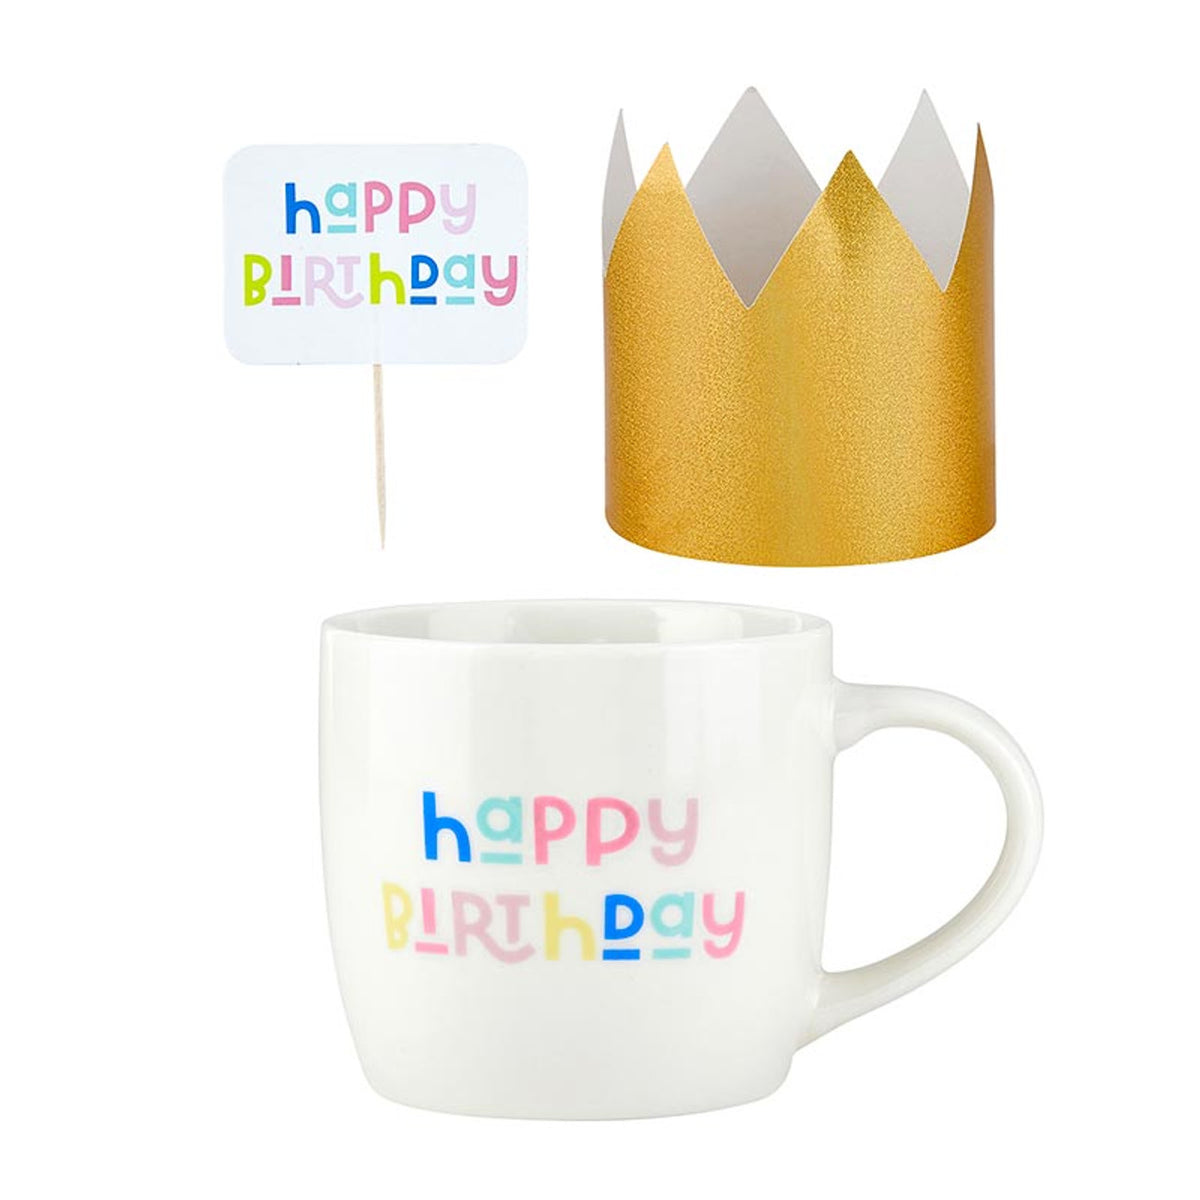 Mug Cake Gift Set